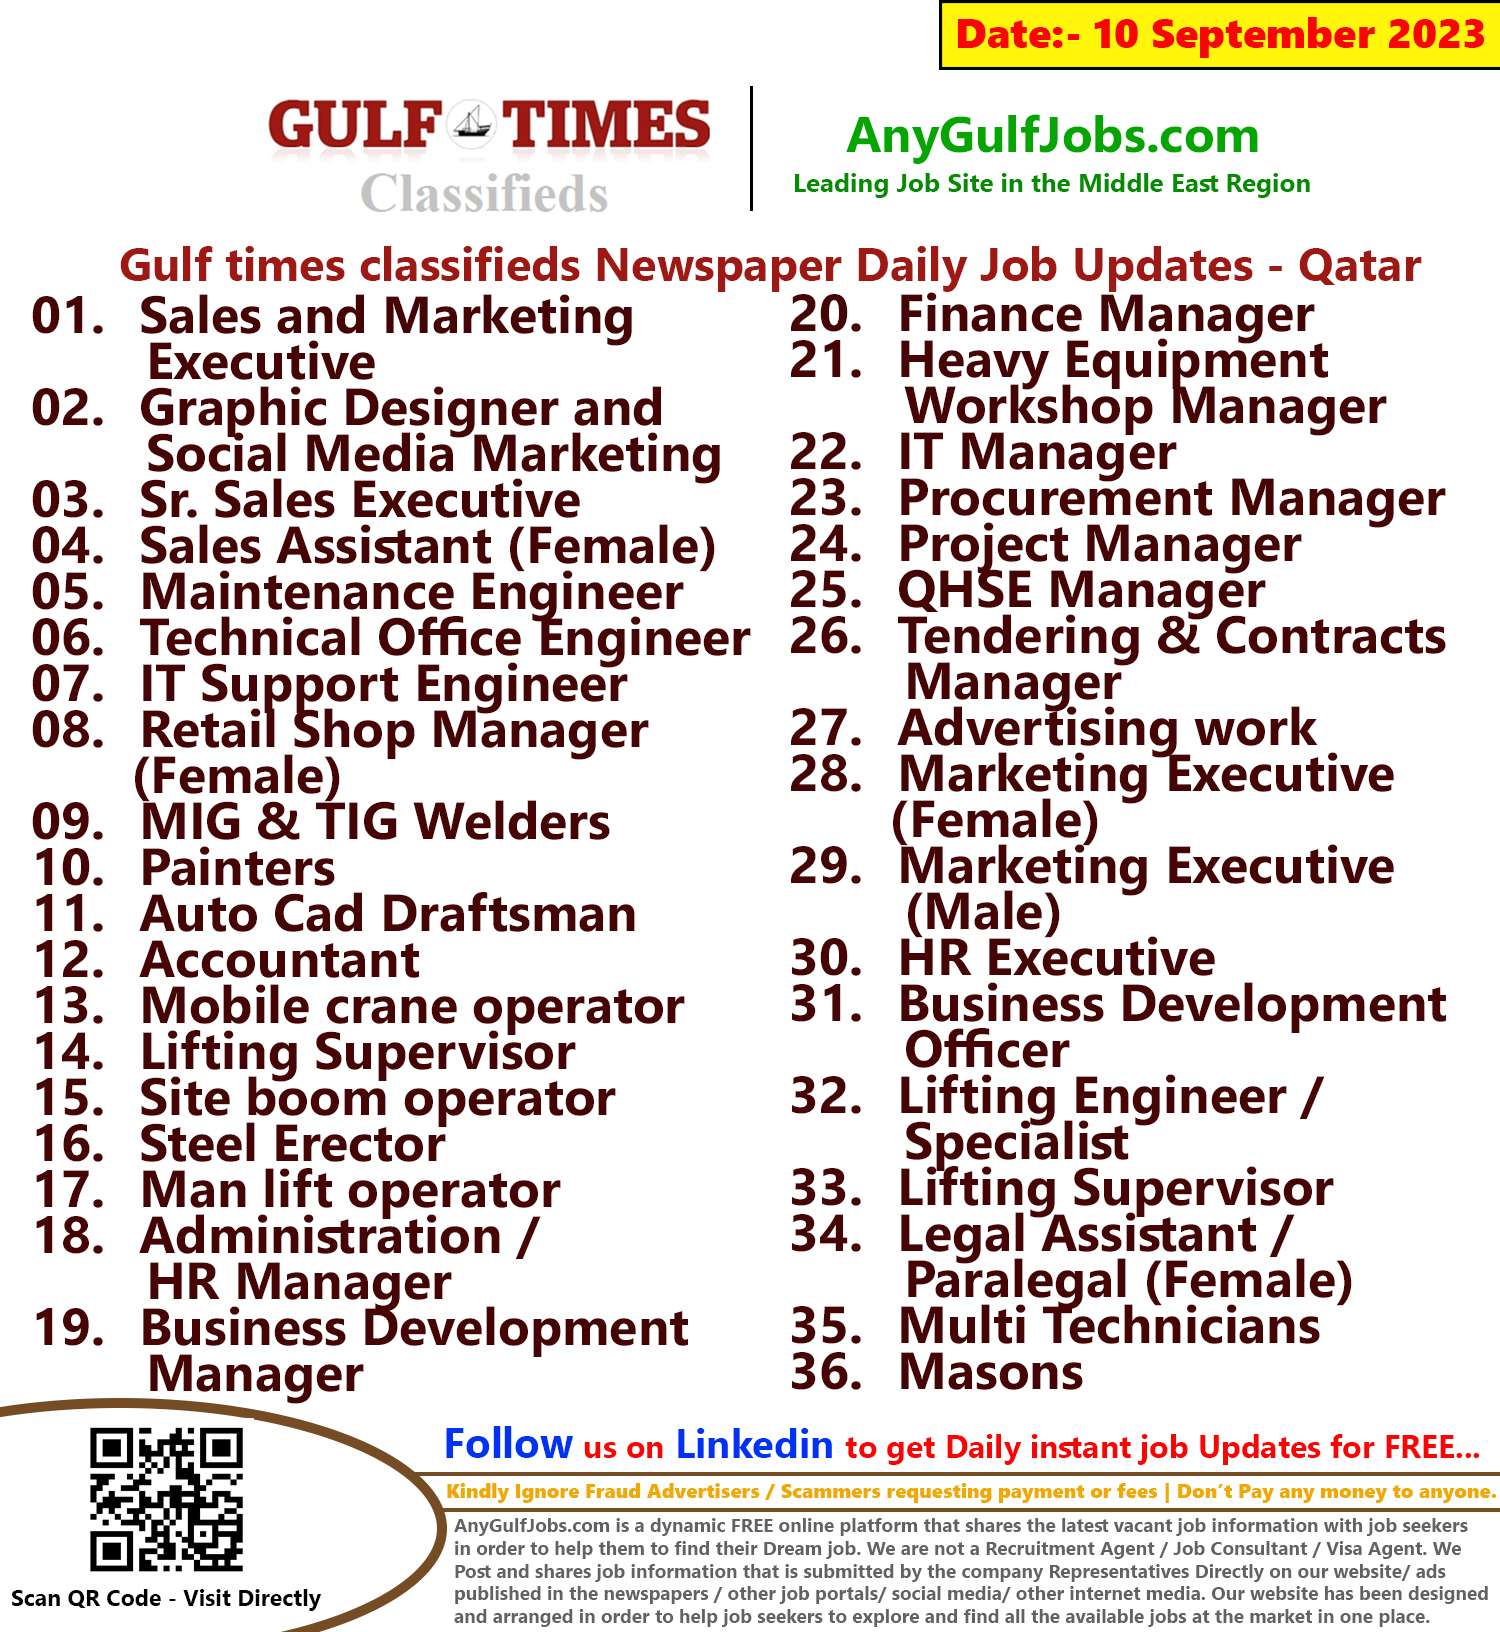 Gulf times classifieds Job Vacancies Qatar - 10 September 2023